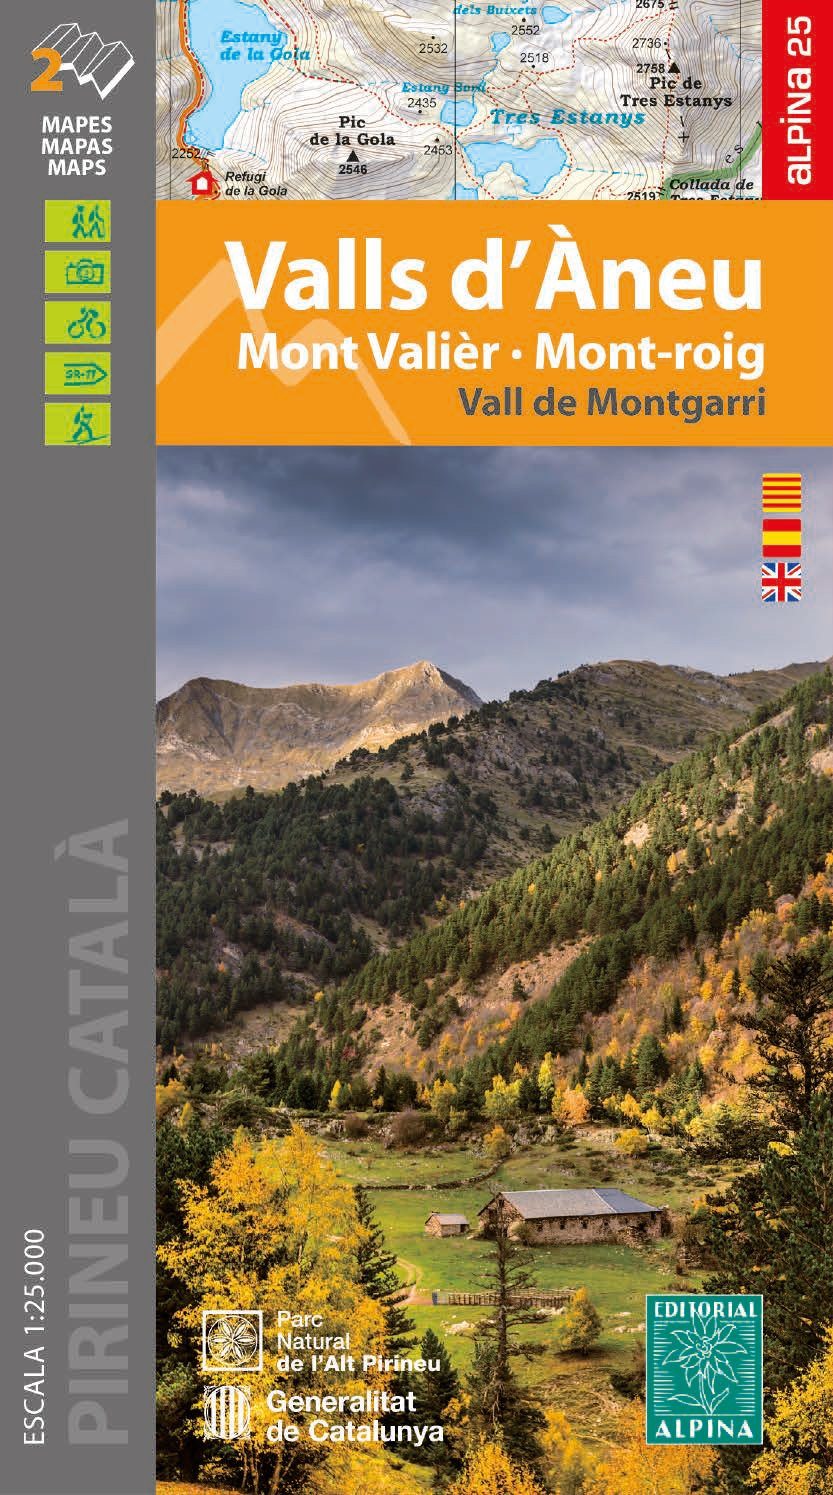 Cartes de randonnée - Valls d’Àneu, Mont Valier, Mont-roig, Vall de Montgarri (Pyrénées catalanes) | Alpina carte pliée Editorial Alpina 